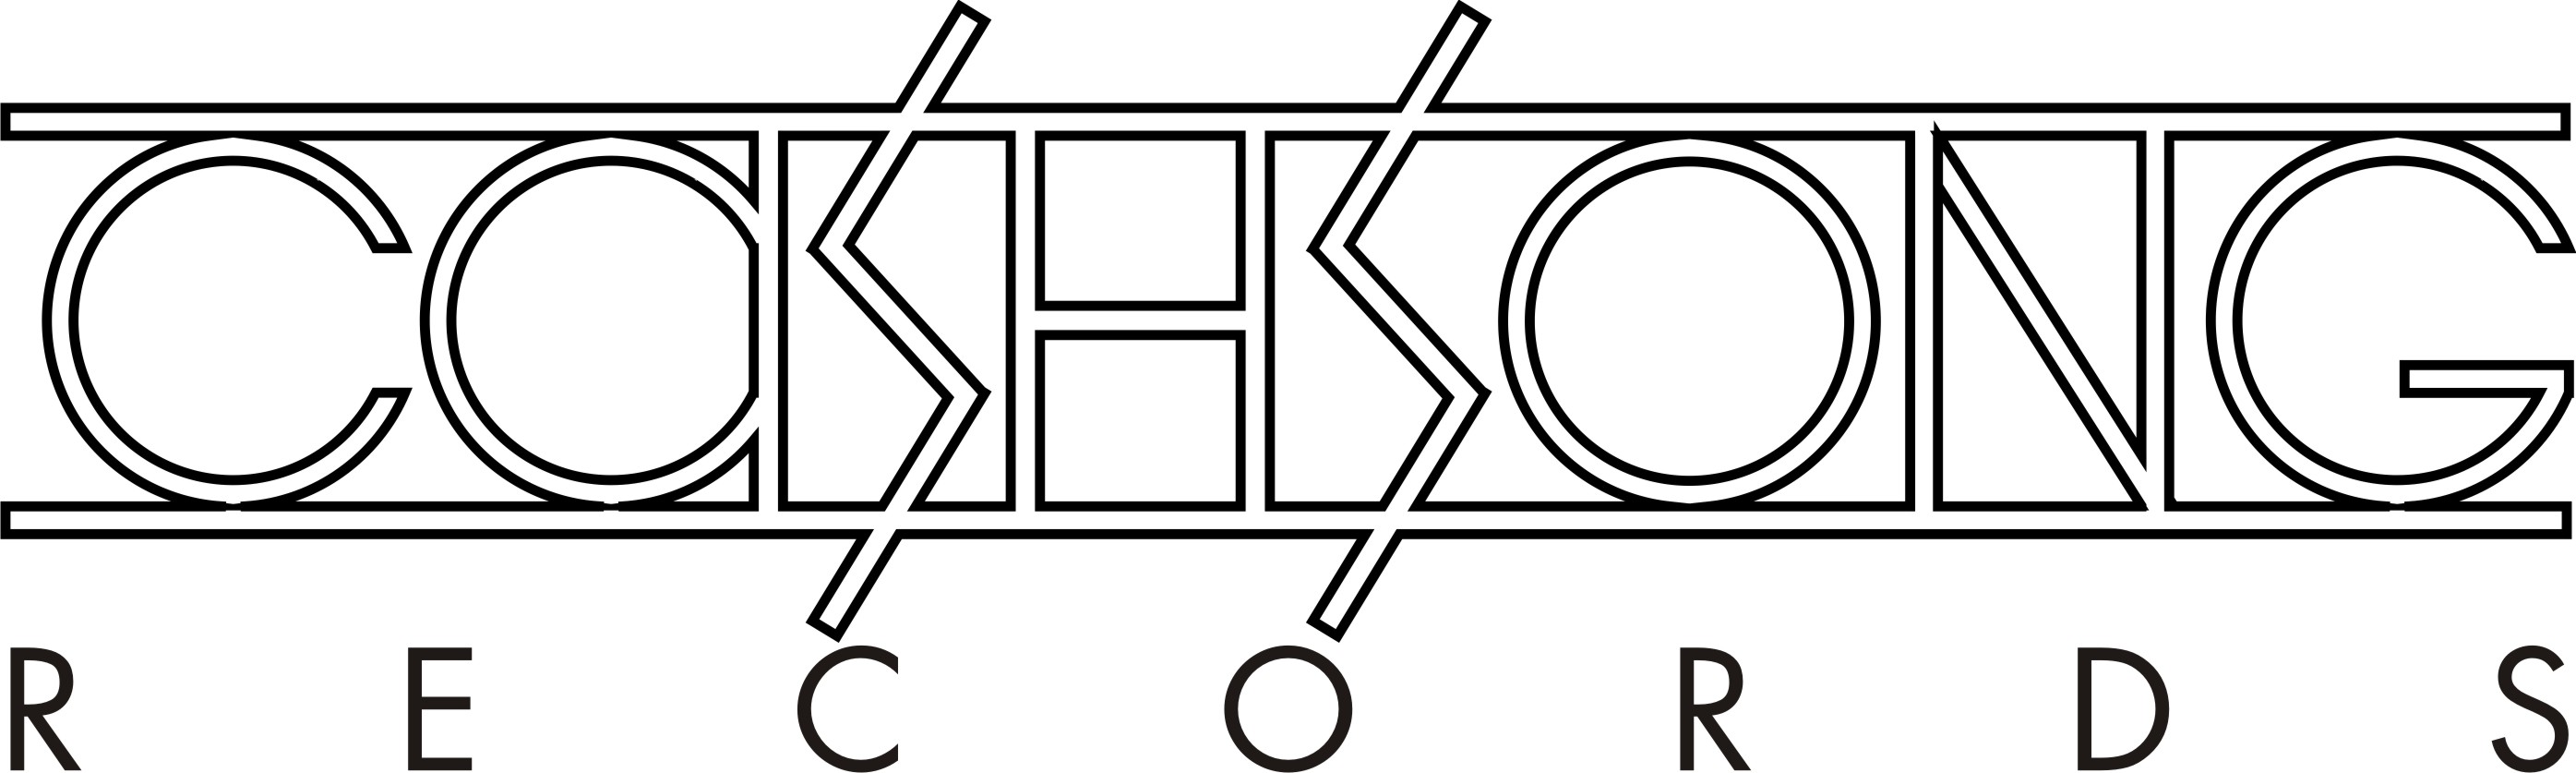 Логотип рекорд-компании